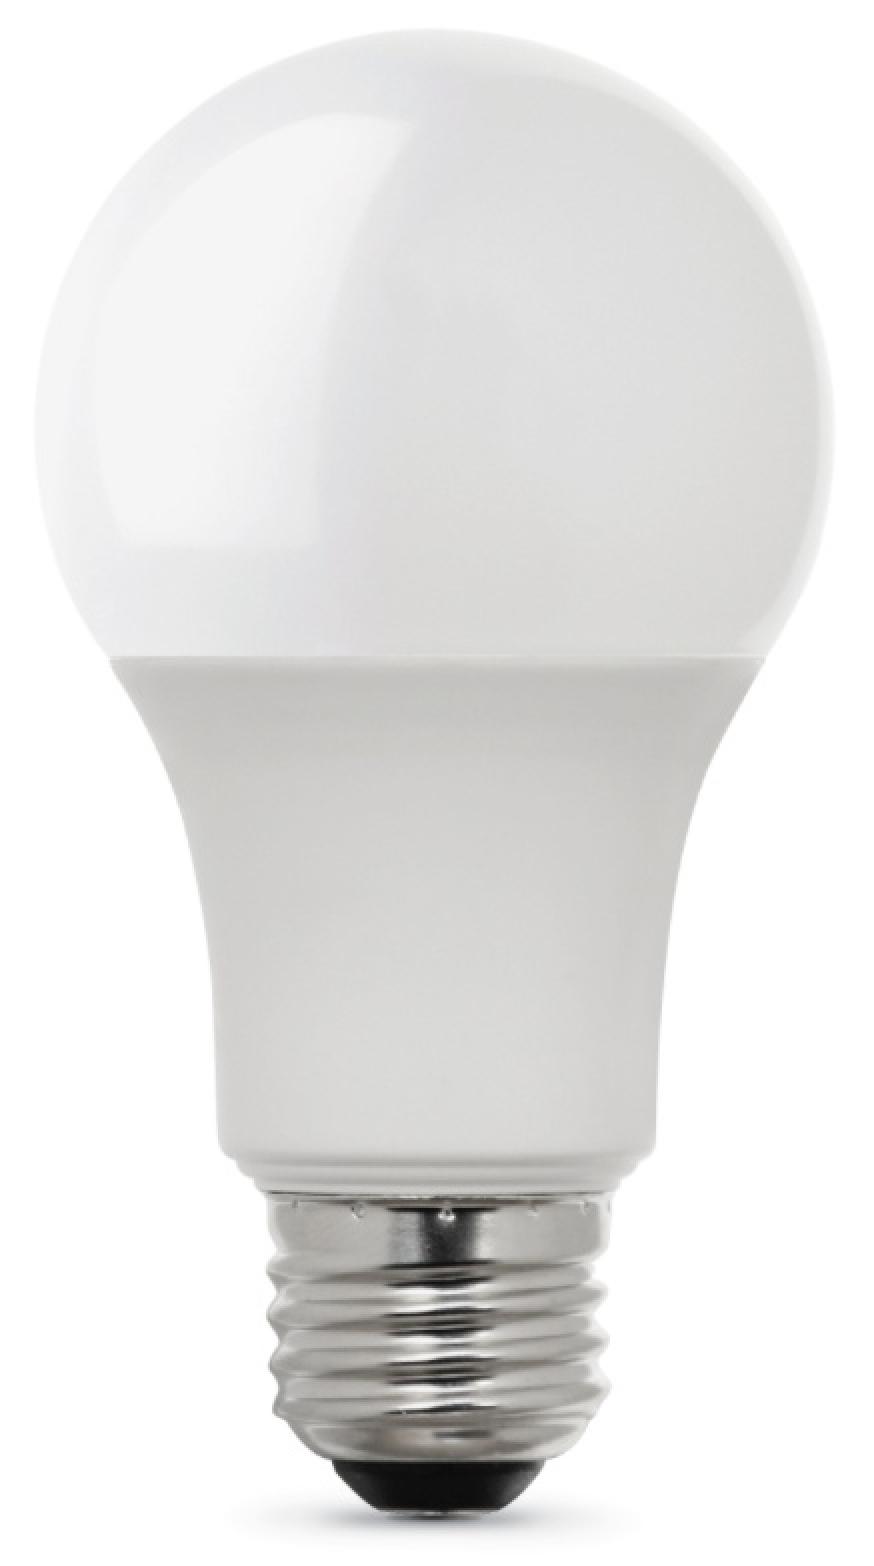 Feit Electric LED 60-Watt Equivalent 800 Lumens Daylight General Purpose Light Bulb